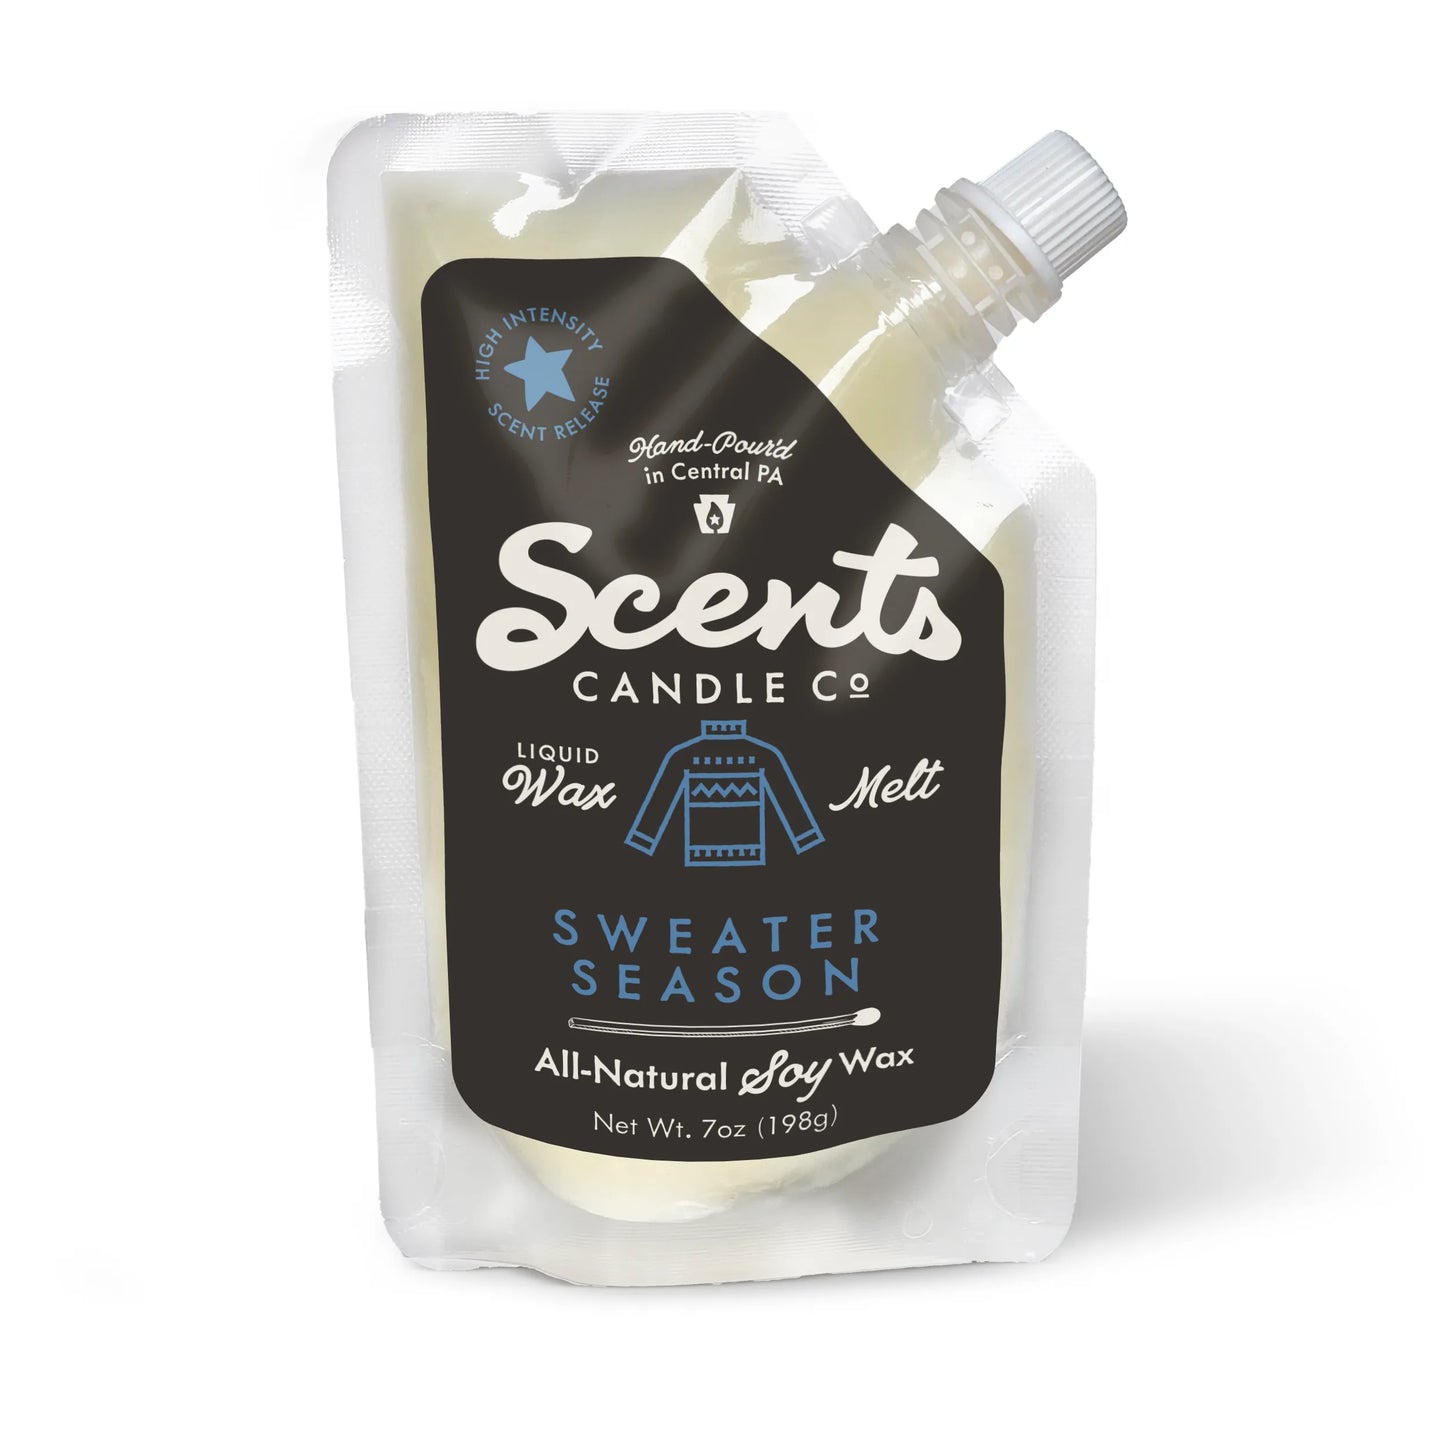 Scents Candle Co. Sweater Season Liquid Wax Melt